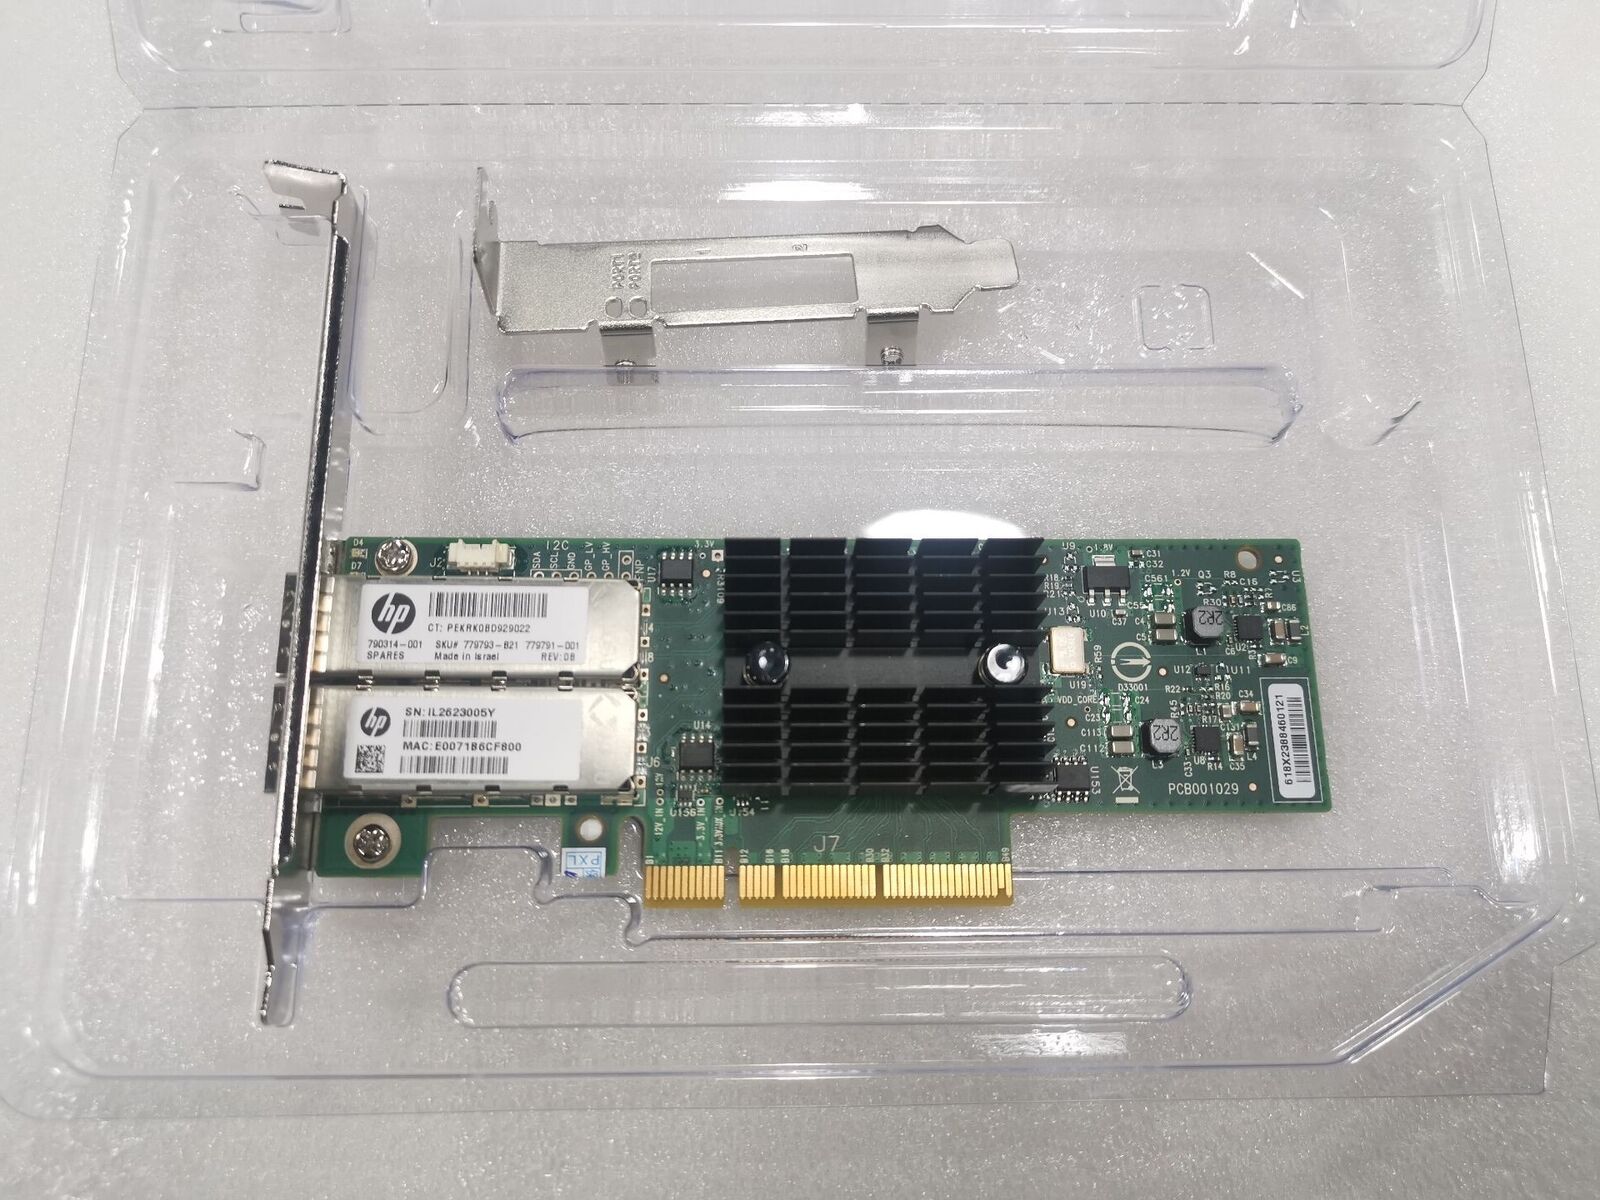 HP MCX312B-XCCT 546SFP Mellanox ConnectX-3 Pro Dual Port 10Gb  Network Card lot